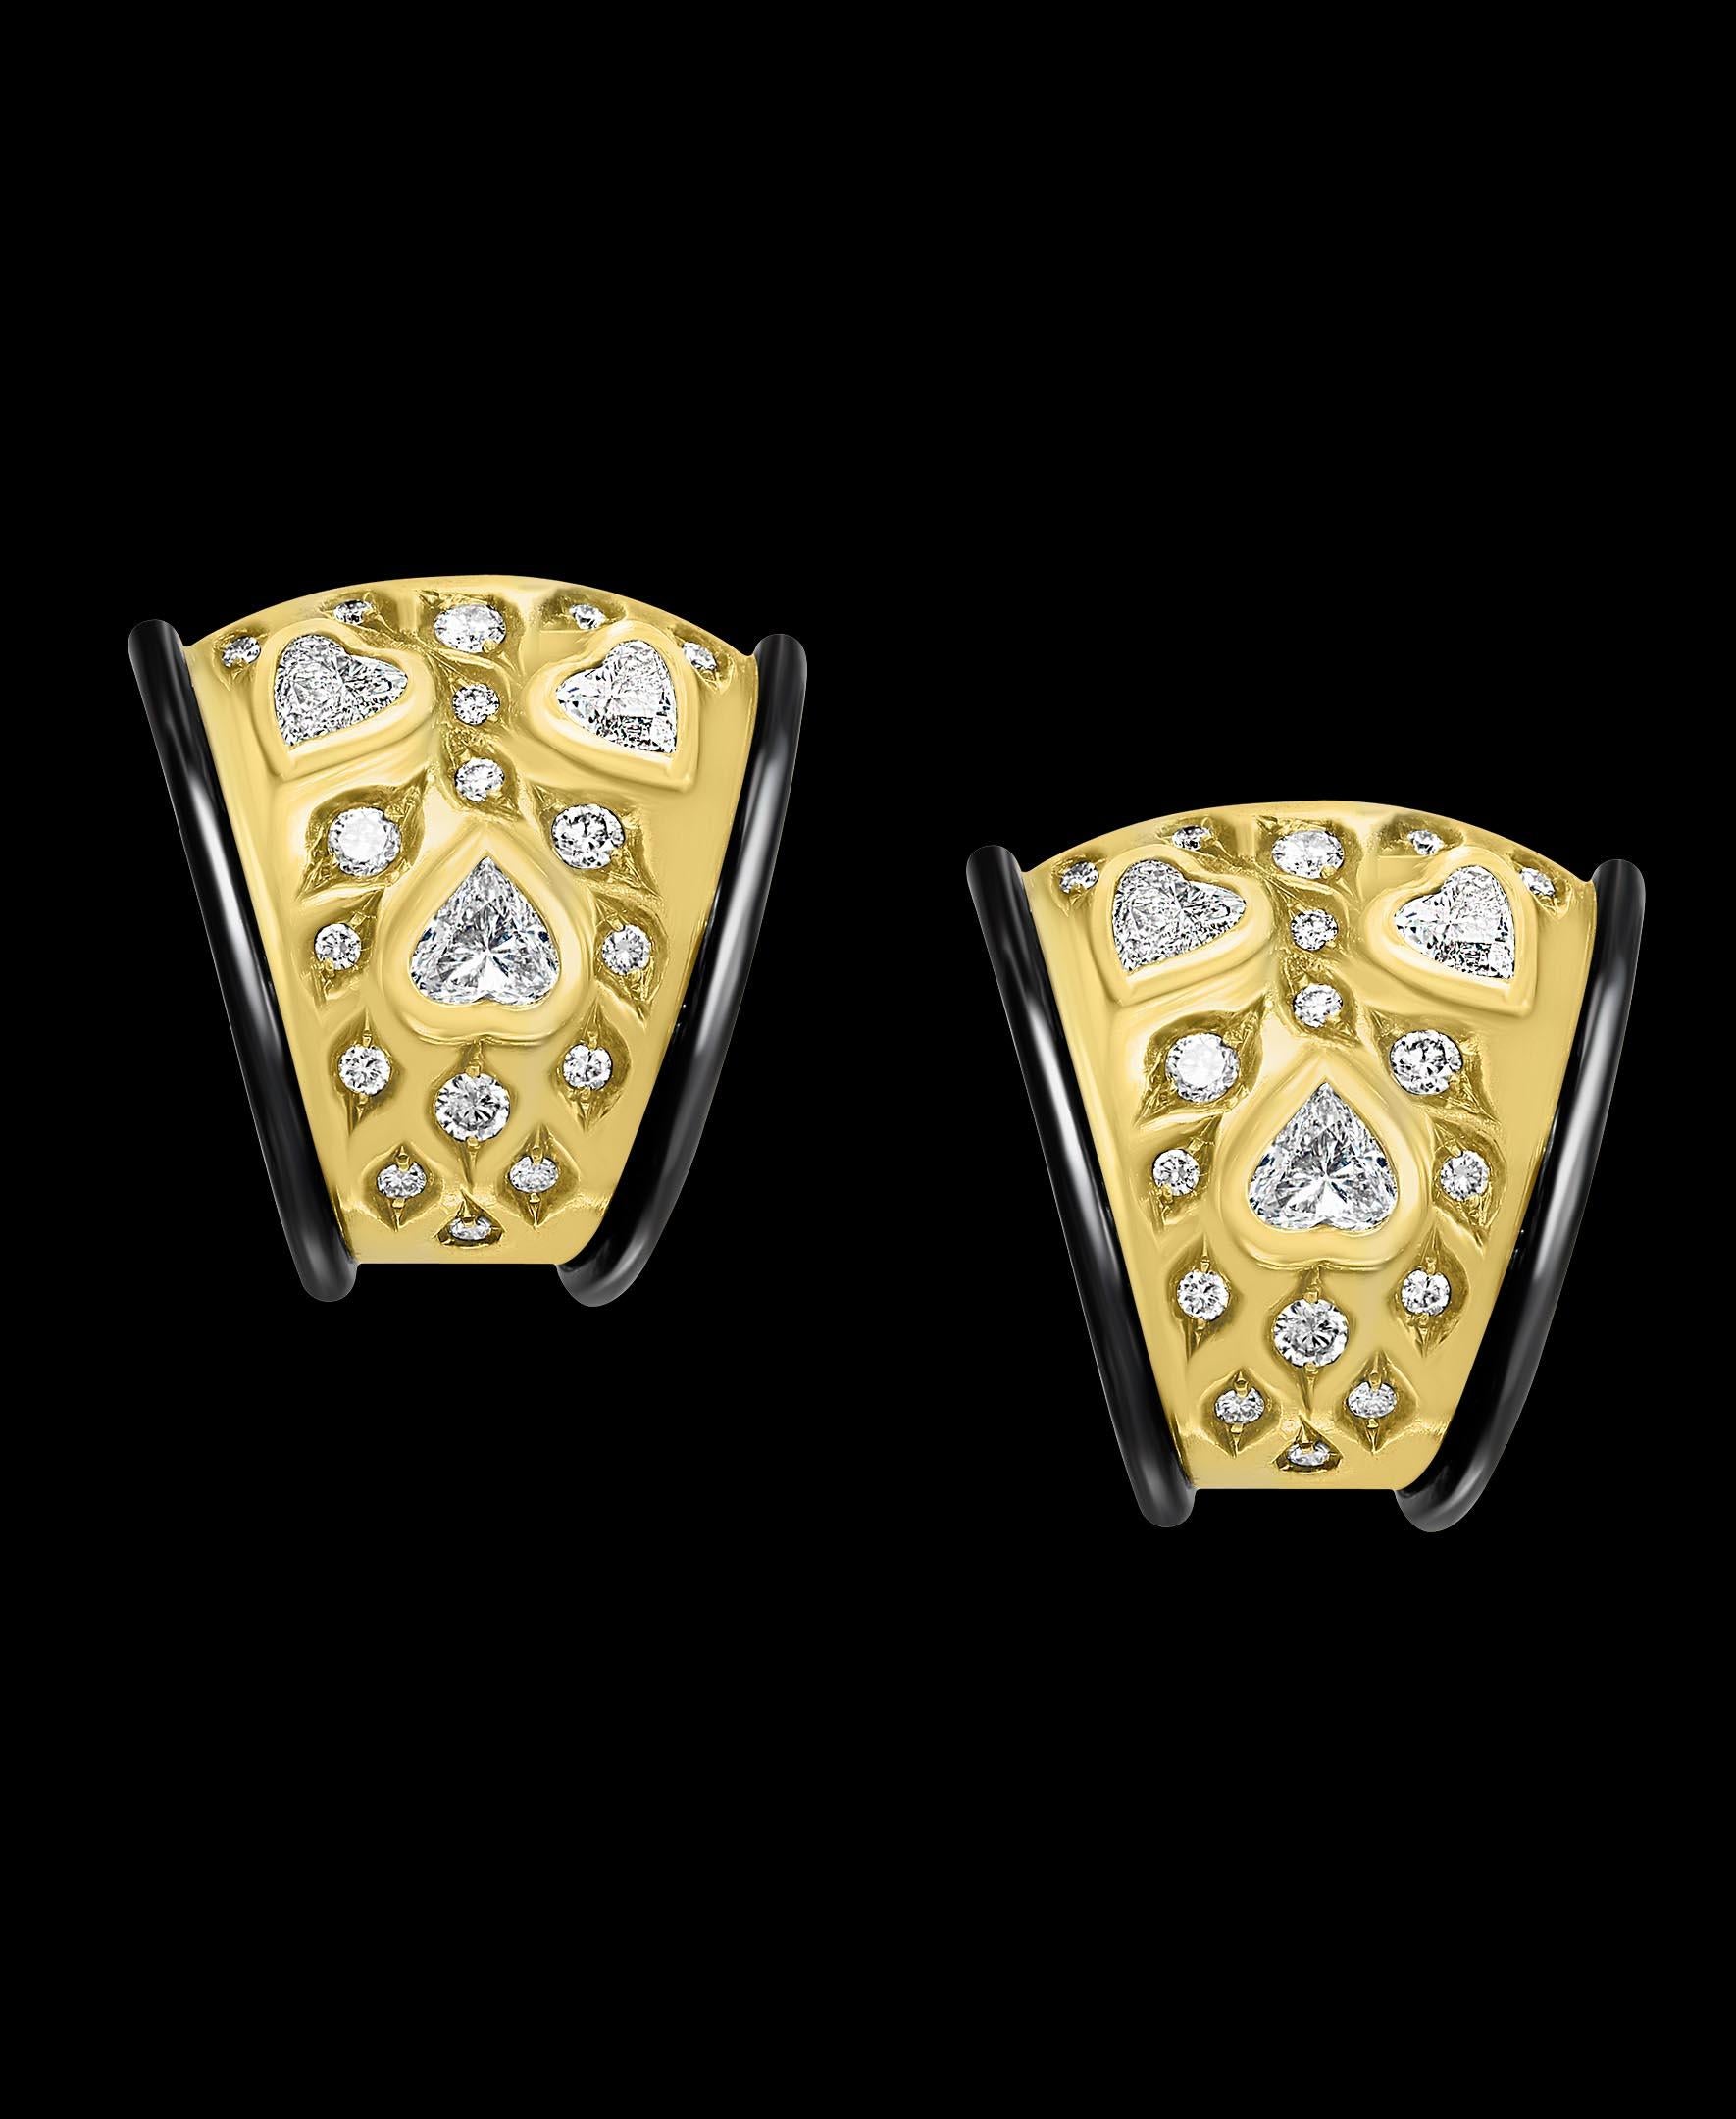 Leporttie Diamond Bangle Ring Earring Three-Piece Set in 18 Karat Yellow Gold For Sale 1